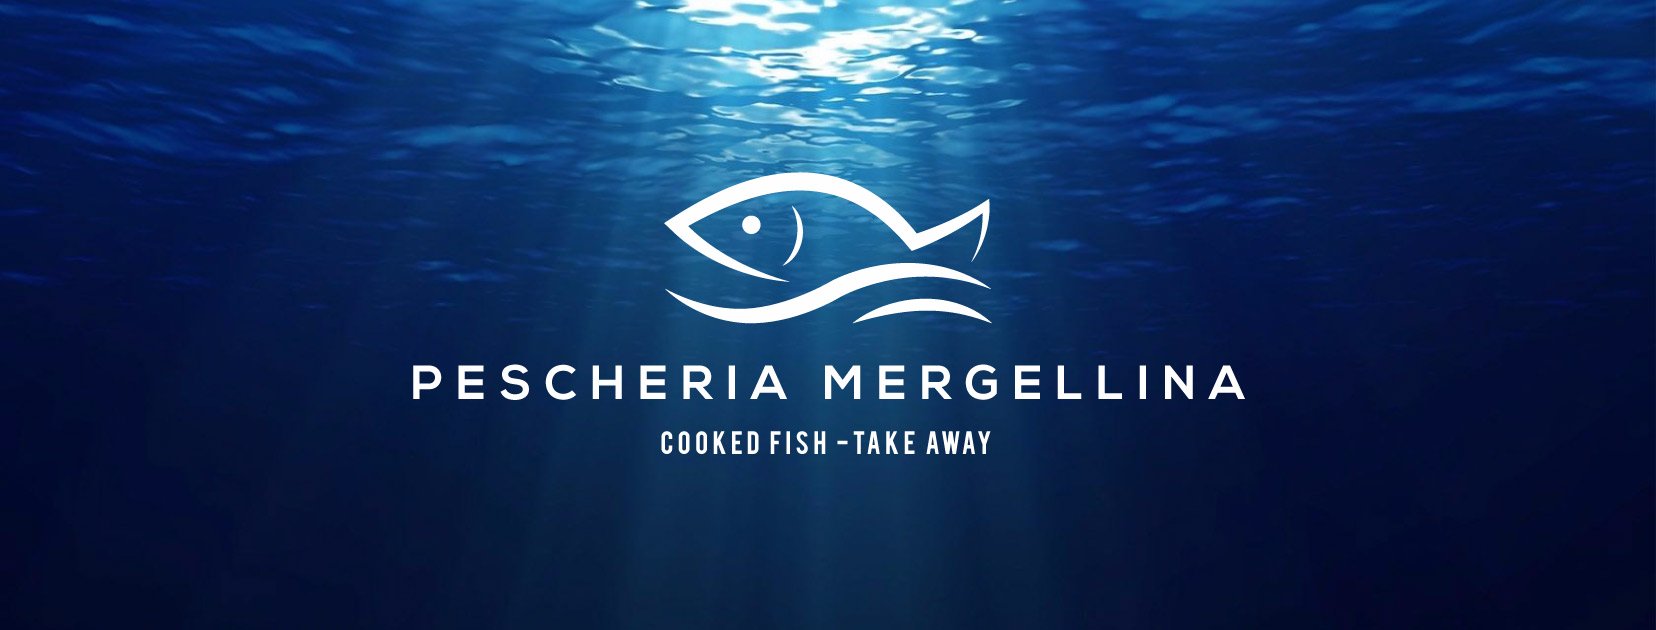 Pescheria Mergellina Cooked Fish Take Away, Napoli